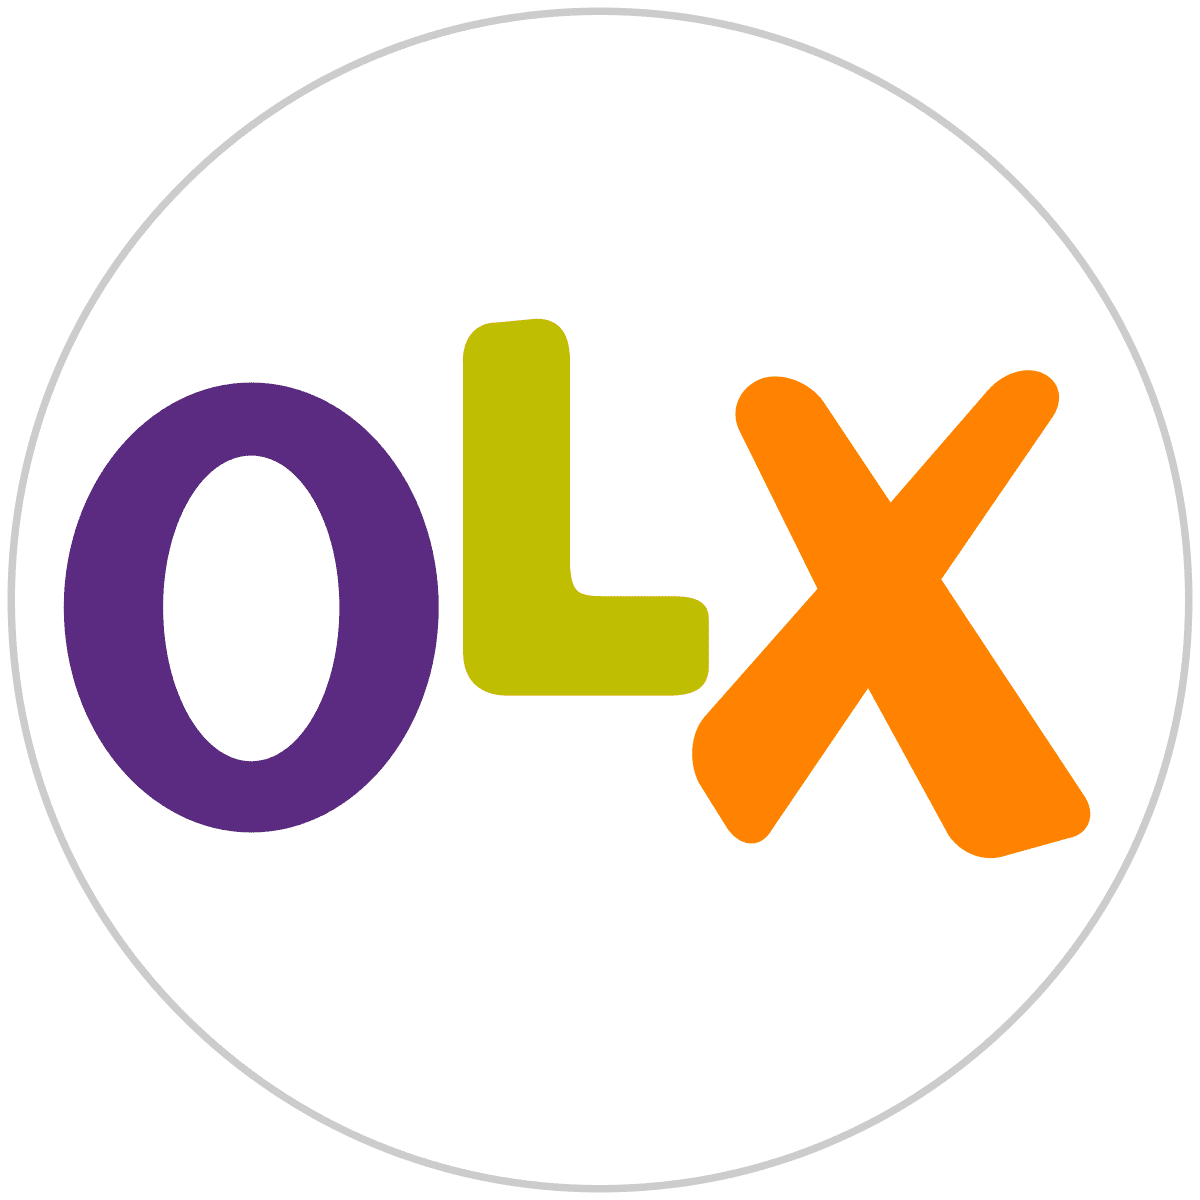 OLX Leaves Nigeria